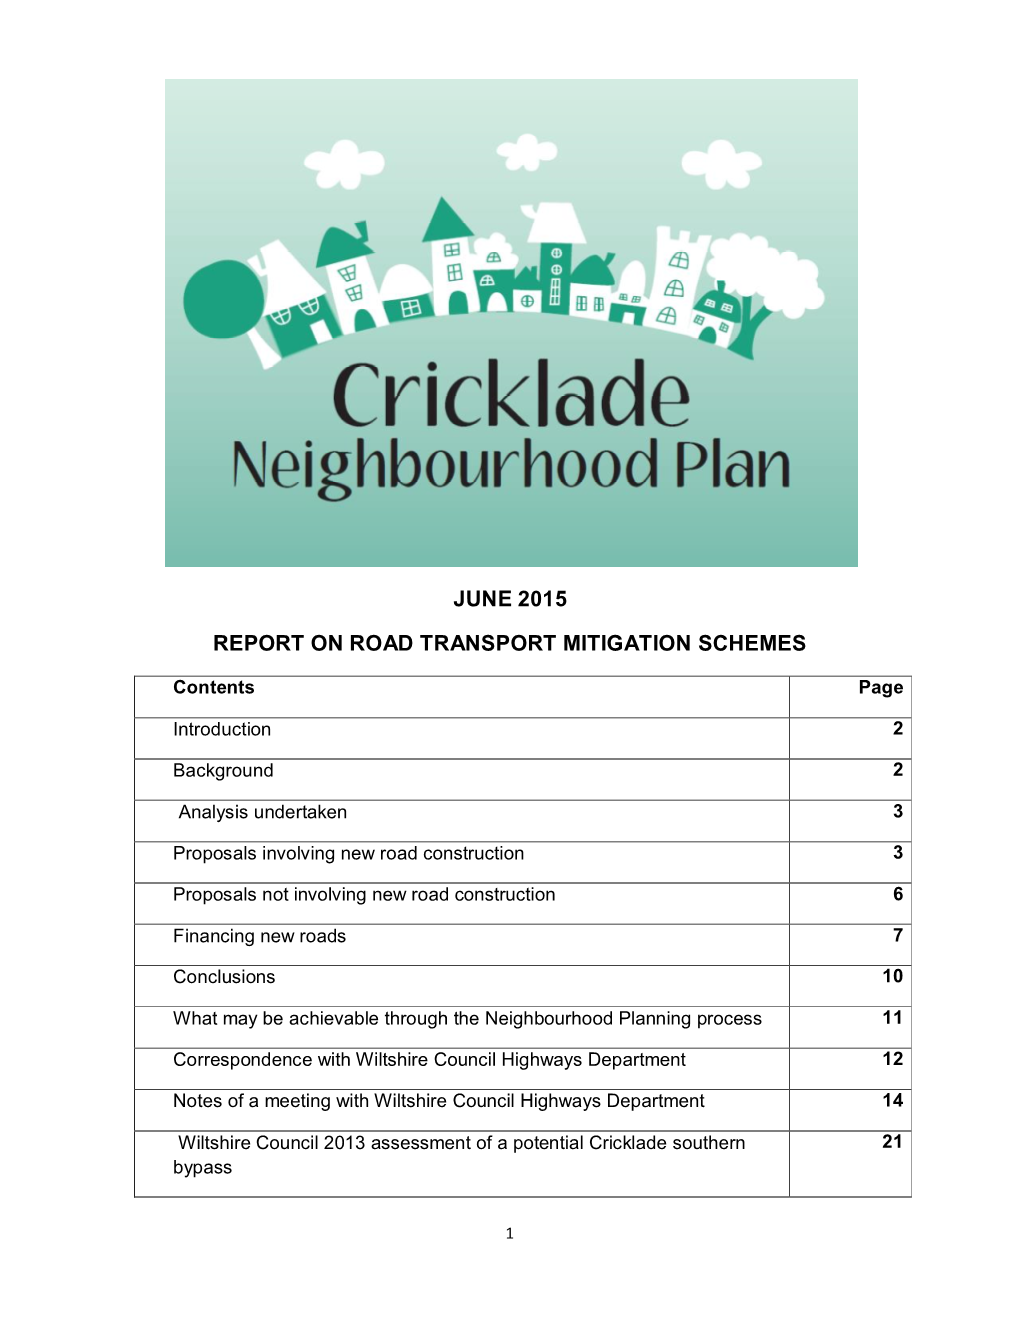 June 2015 Report on Road Transport Mitigation